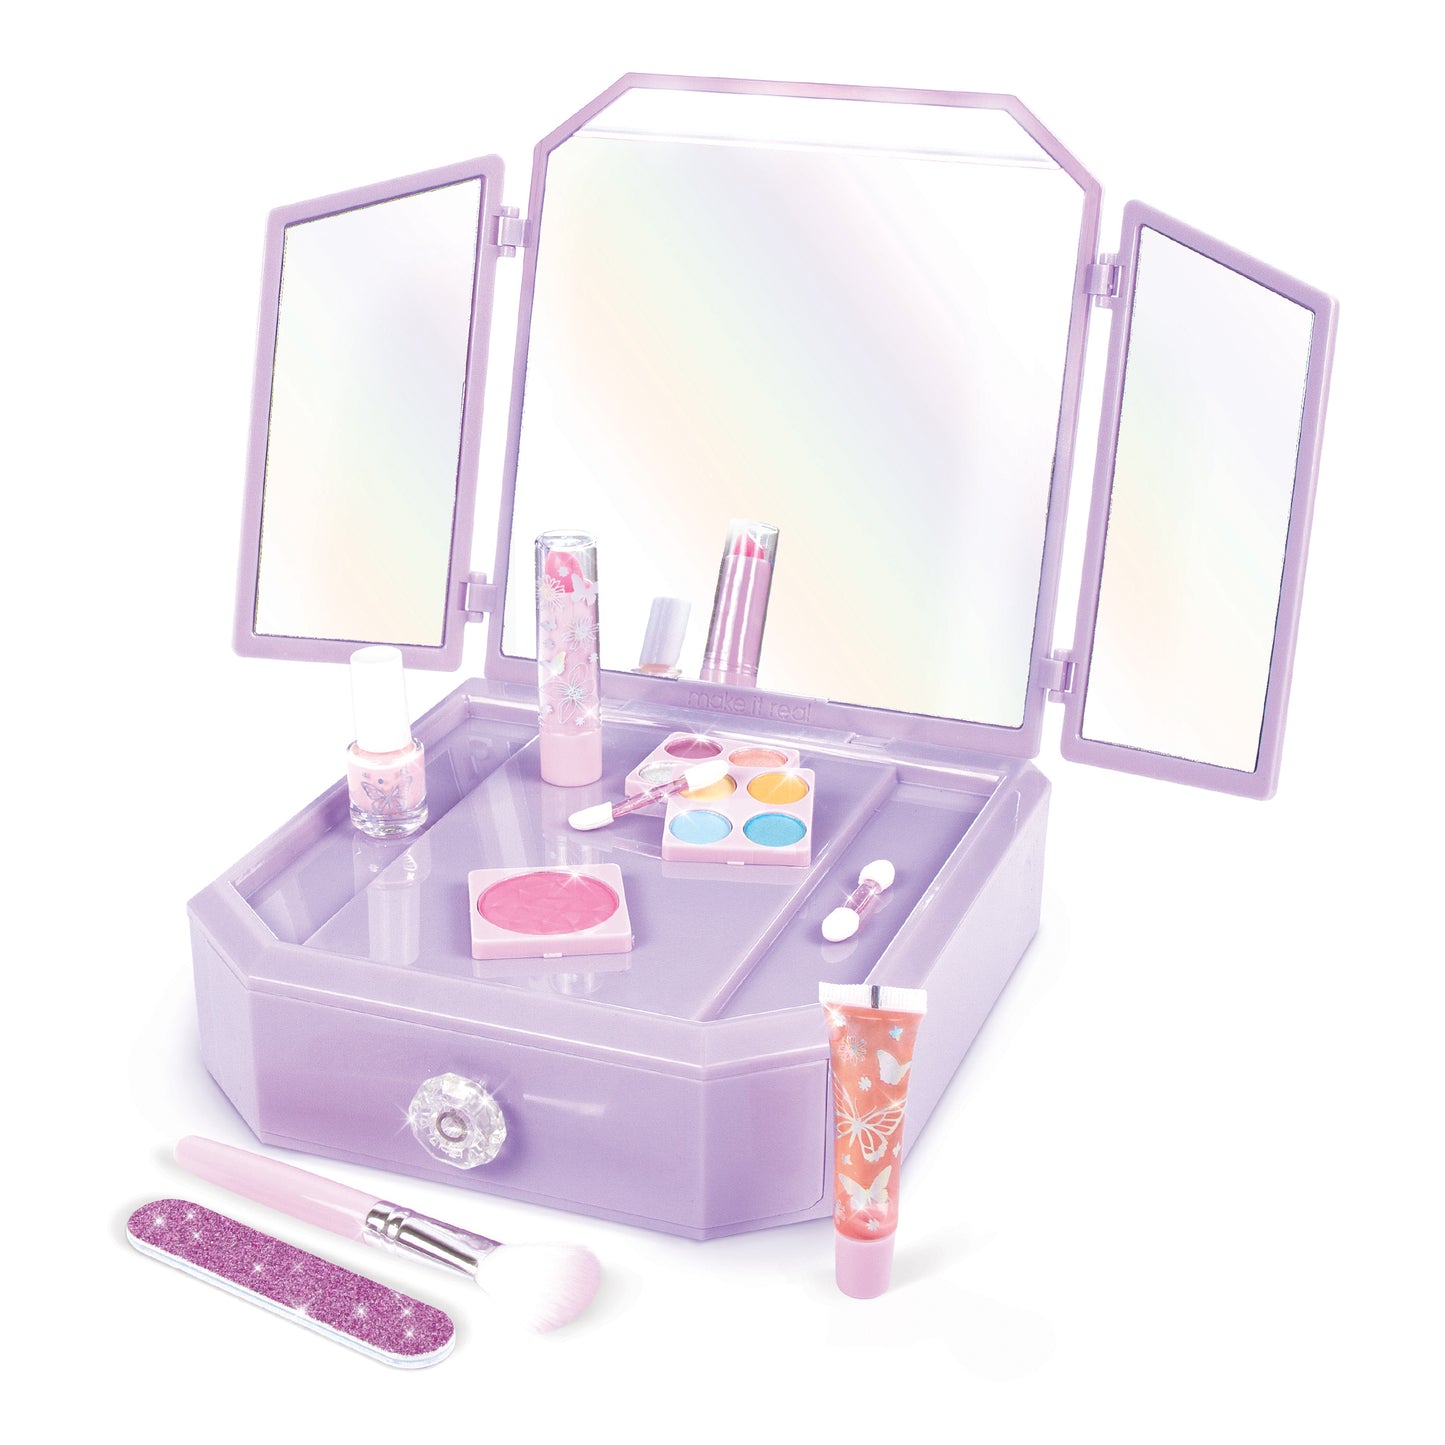 Deluxe Light Up Mirrored Vanity & Cosmetic Set